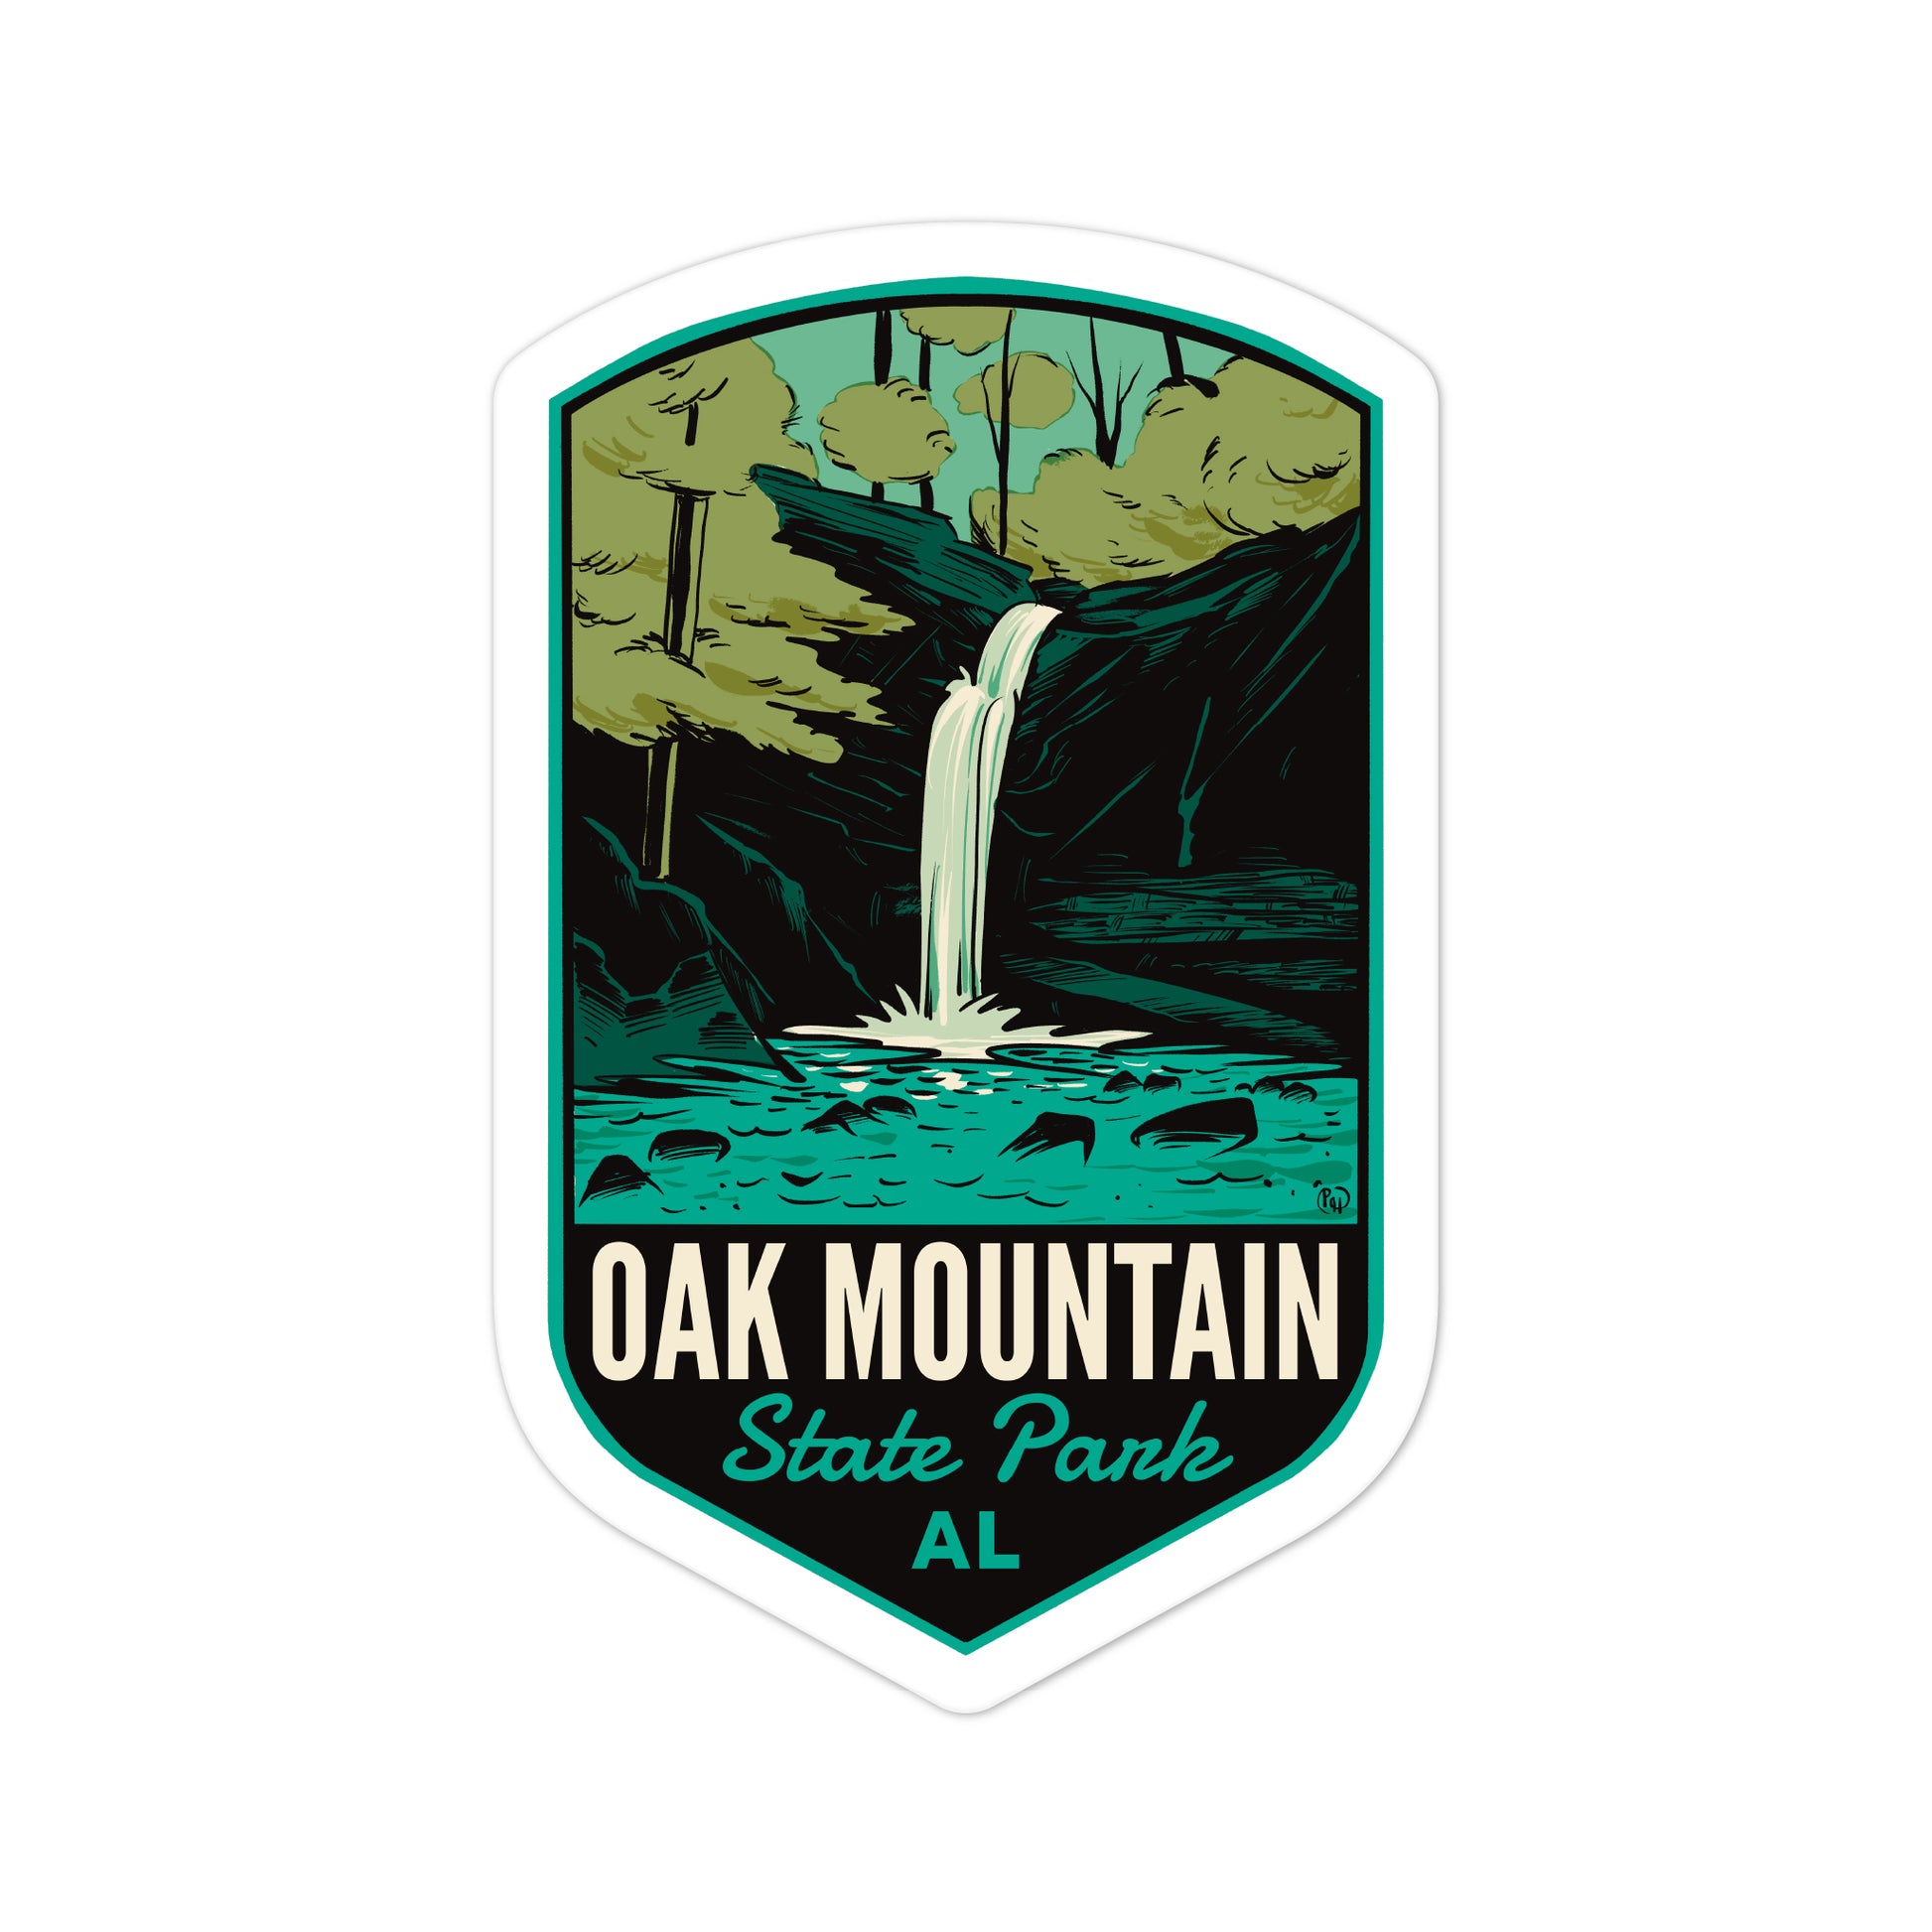 A sticker of Oak Mountain State Park